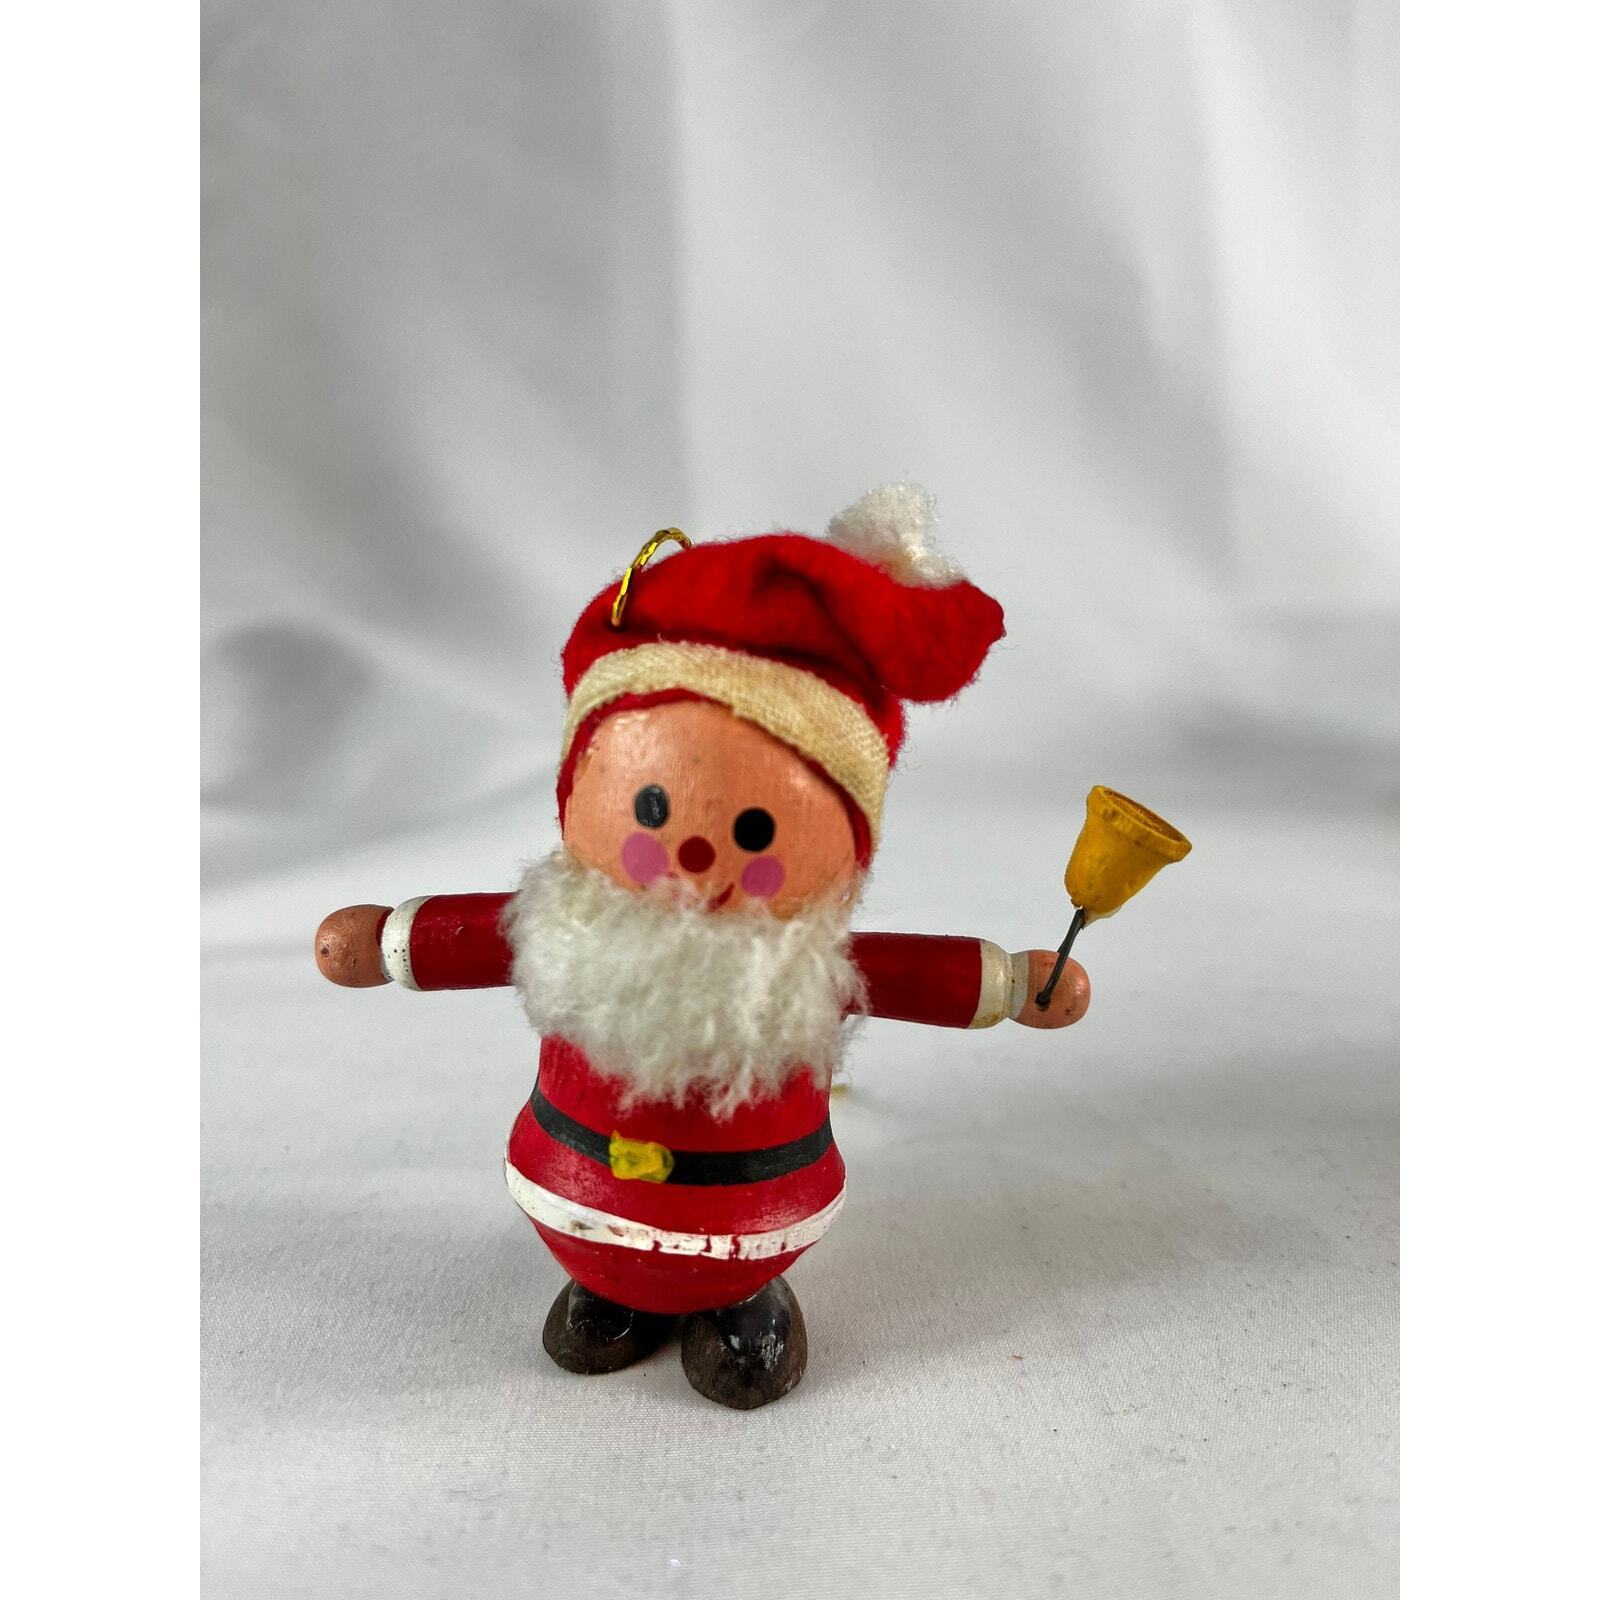 Vintage Handmade Mini Santa Ornament with Bell, Adorable Wooden ChristmasDecor